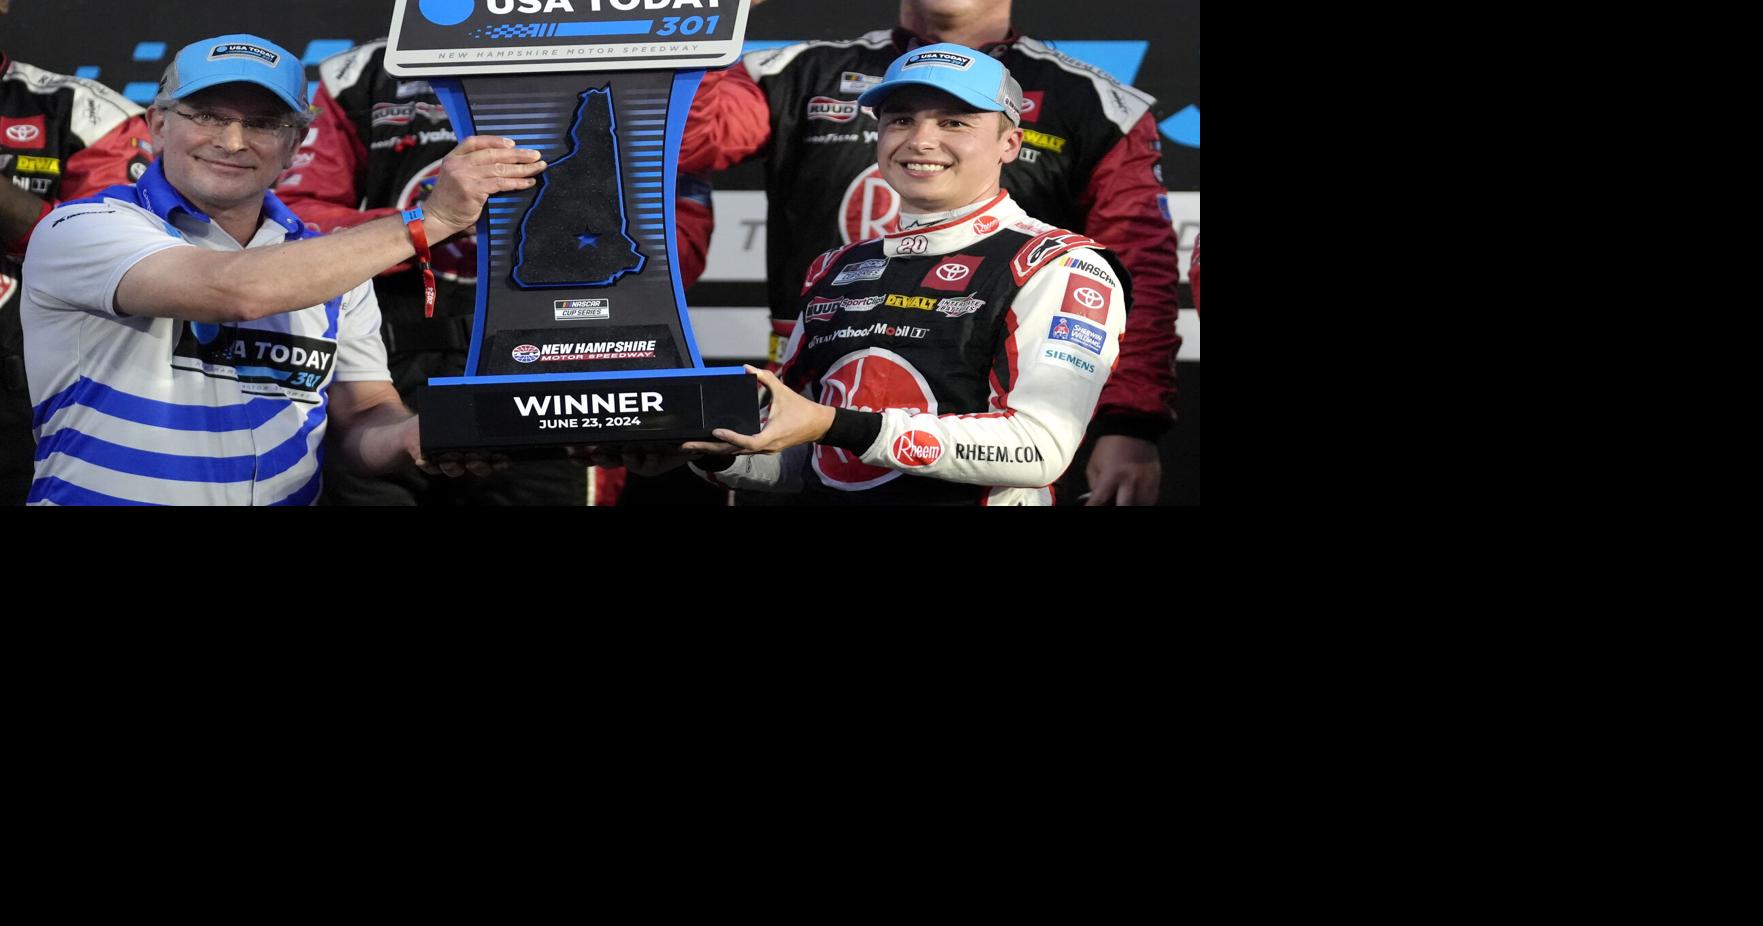 Joe Gibbs driver Christopher Bell emerges as NASCAR championship contender | Sports